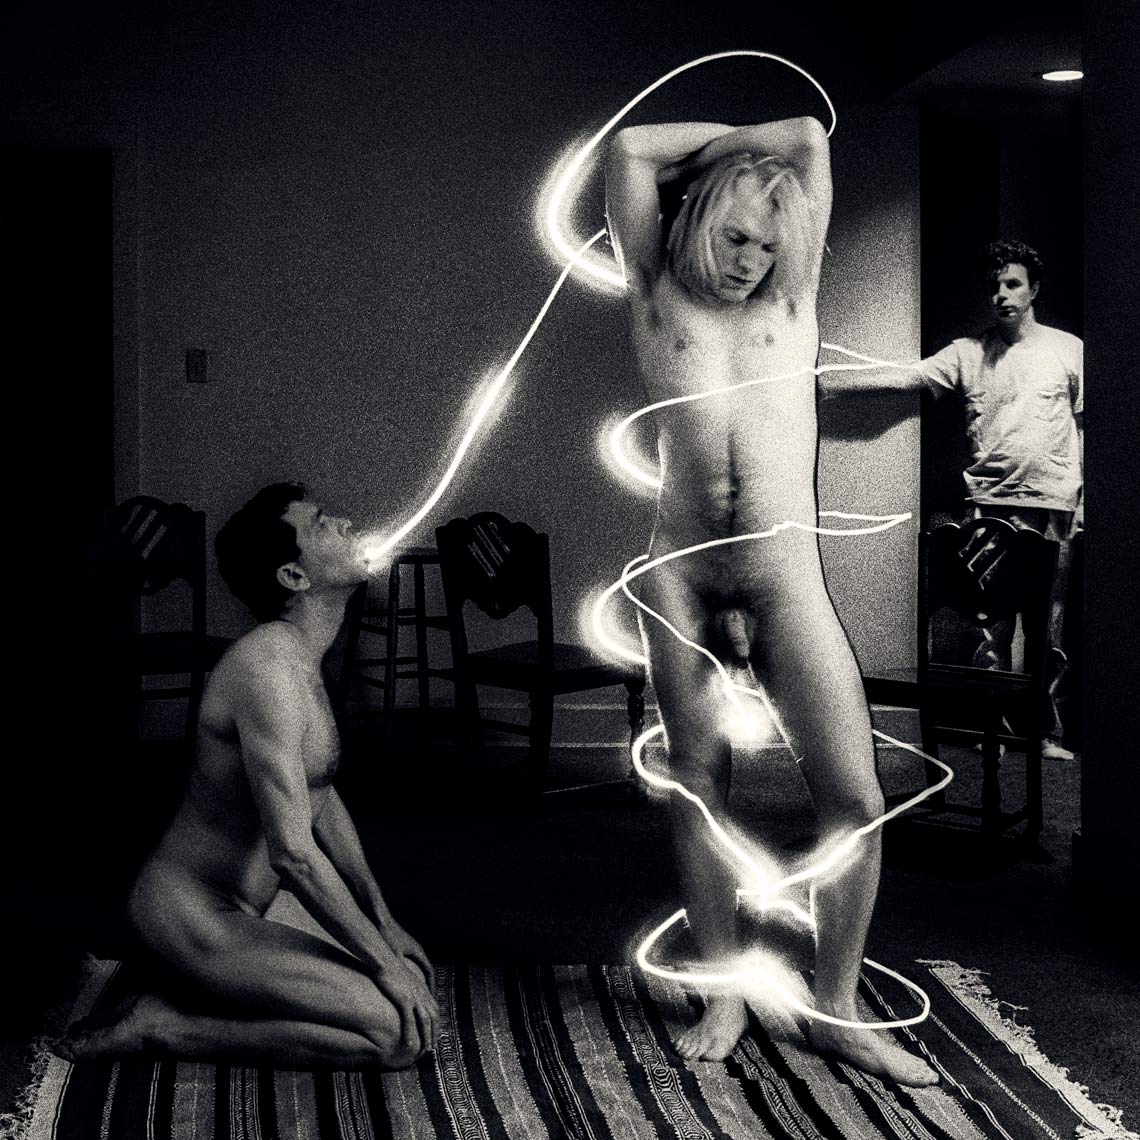 David Lebe; Bernard & Grady & Me,1986, K, , male nude, light drawing, black and white photograph